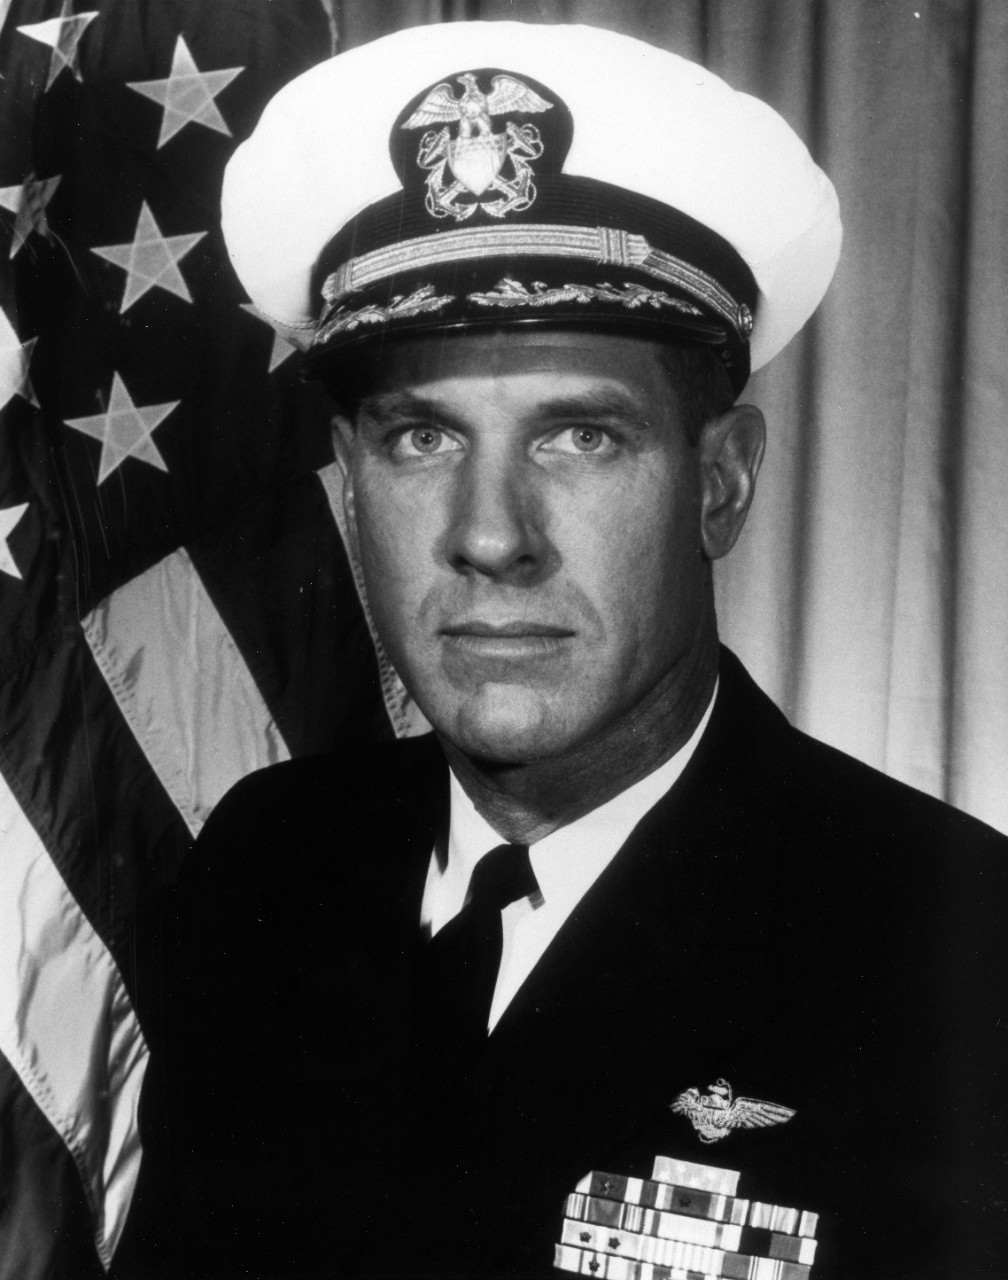 Official portrait of Captain Thomas J. Hudner, 1972